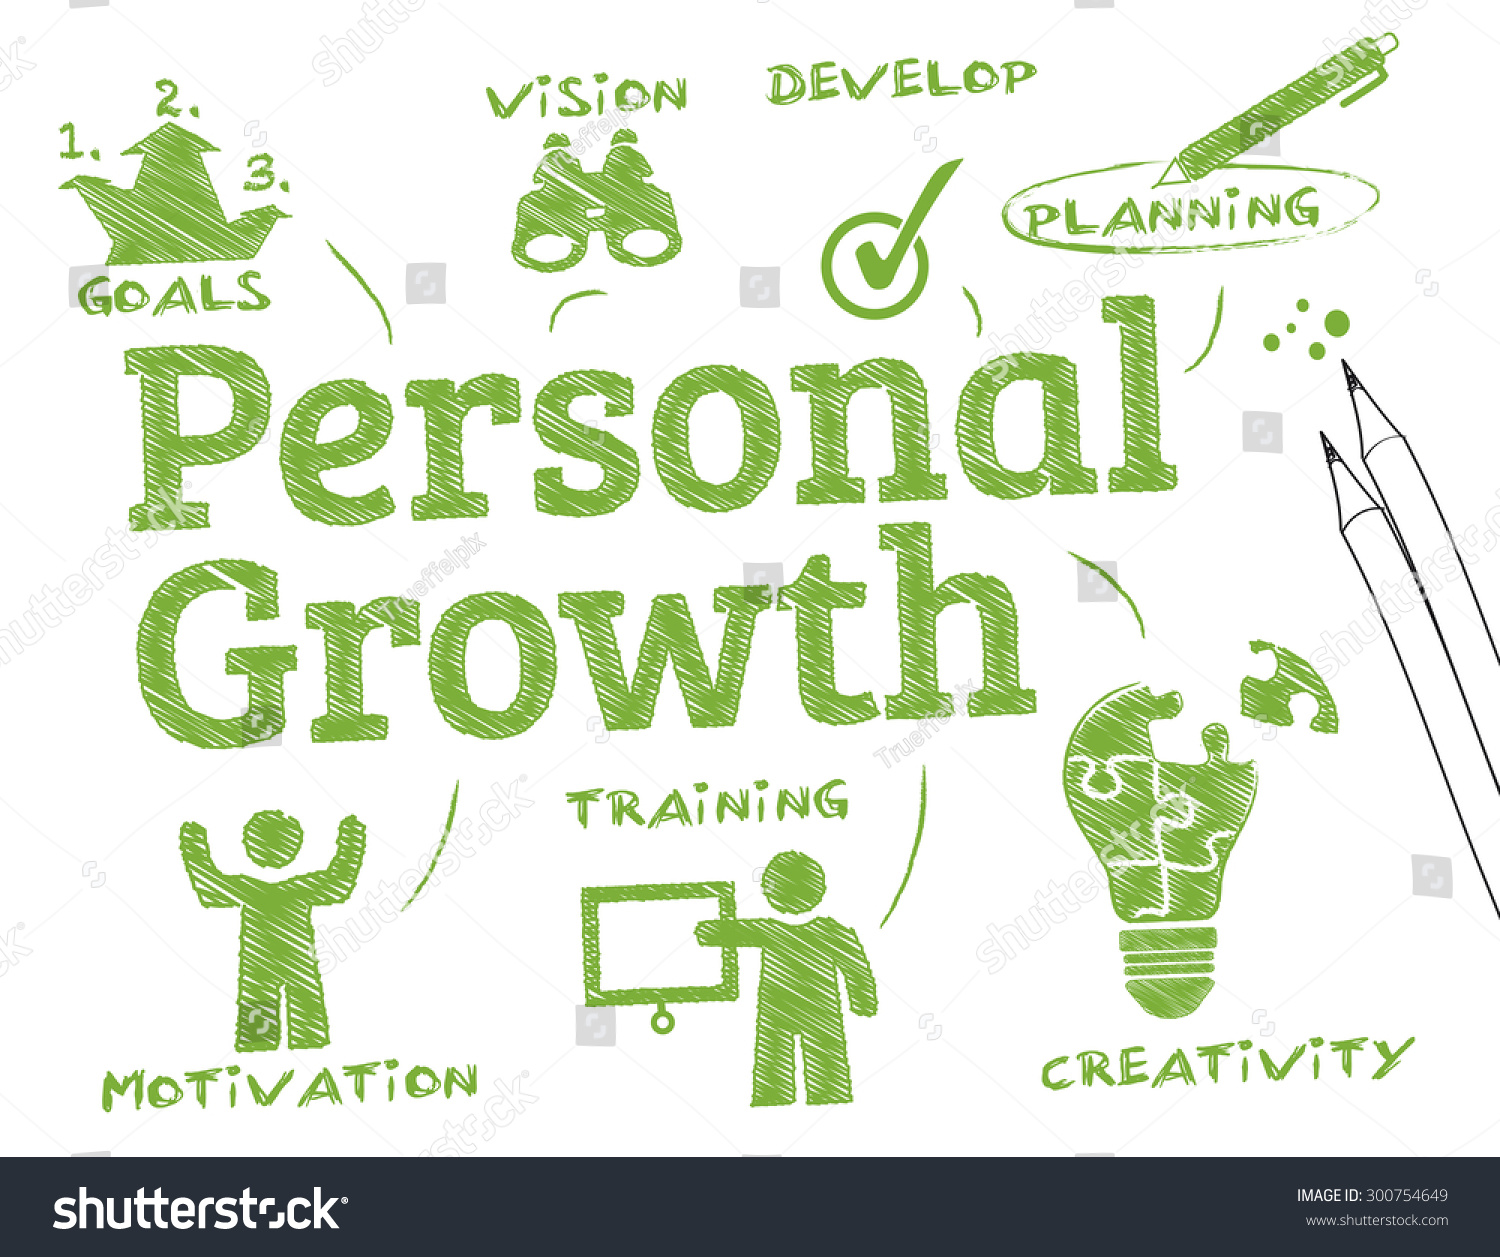 Personal Growth Chart Keywords Icons Vector de stock libre de regal 237 as 